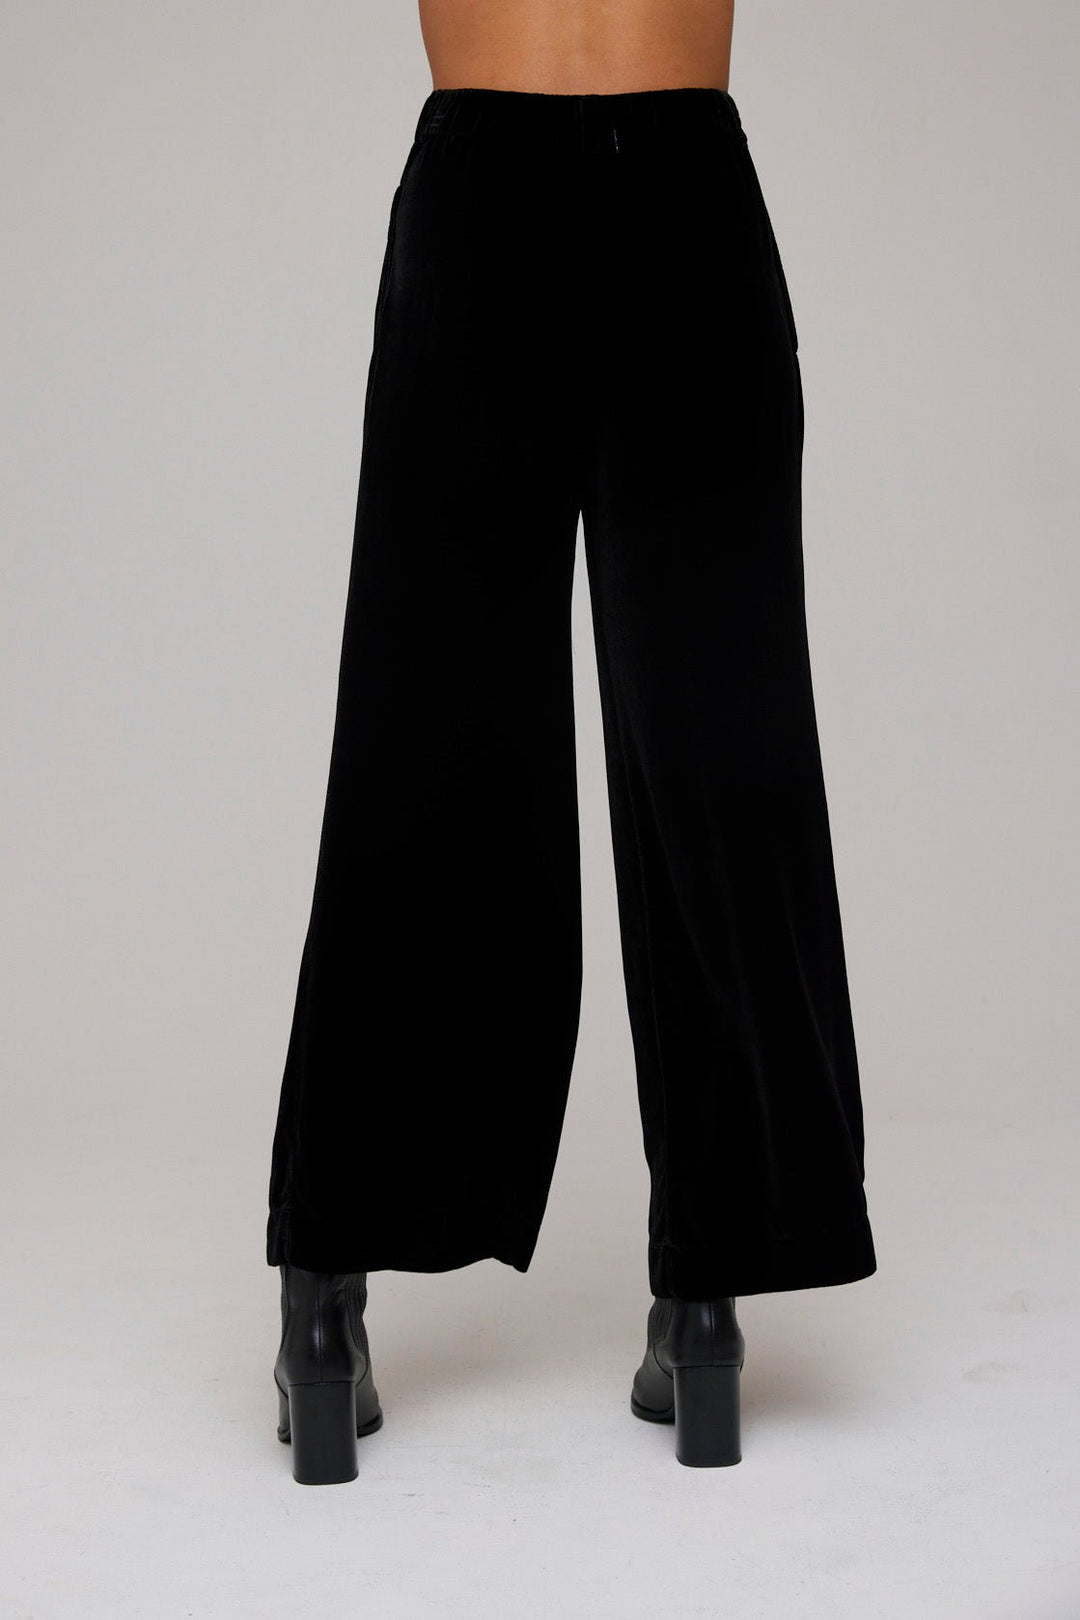 SCORPIUS Black velvet Pants – Cation Clothing